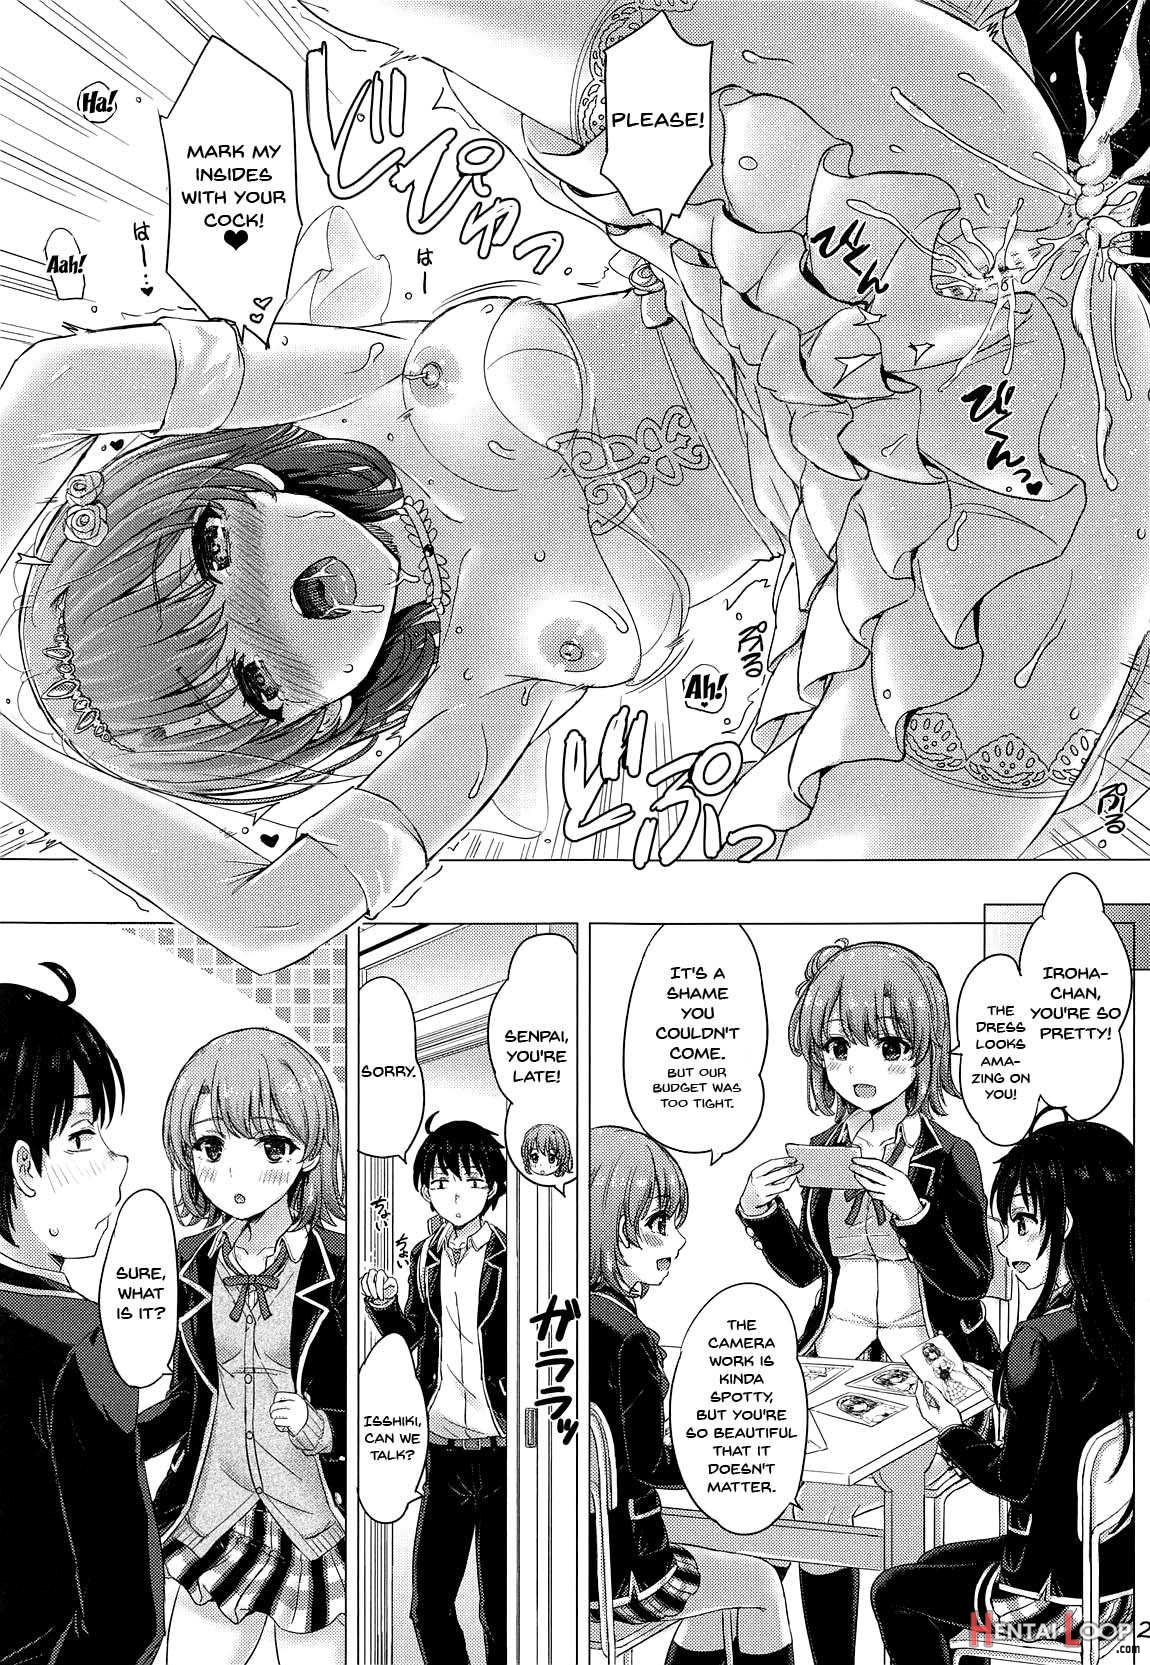 Wedding Irohasu! - Iroha's Gonna Marry You After Today's Scholl! page 20